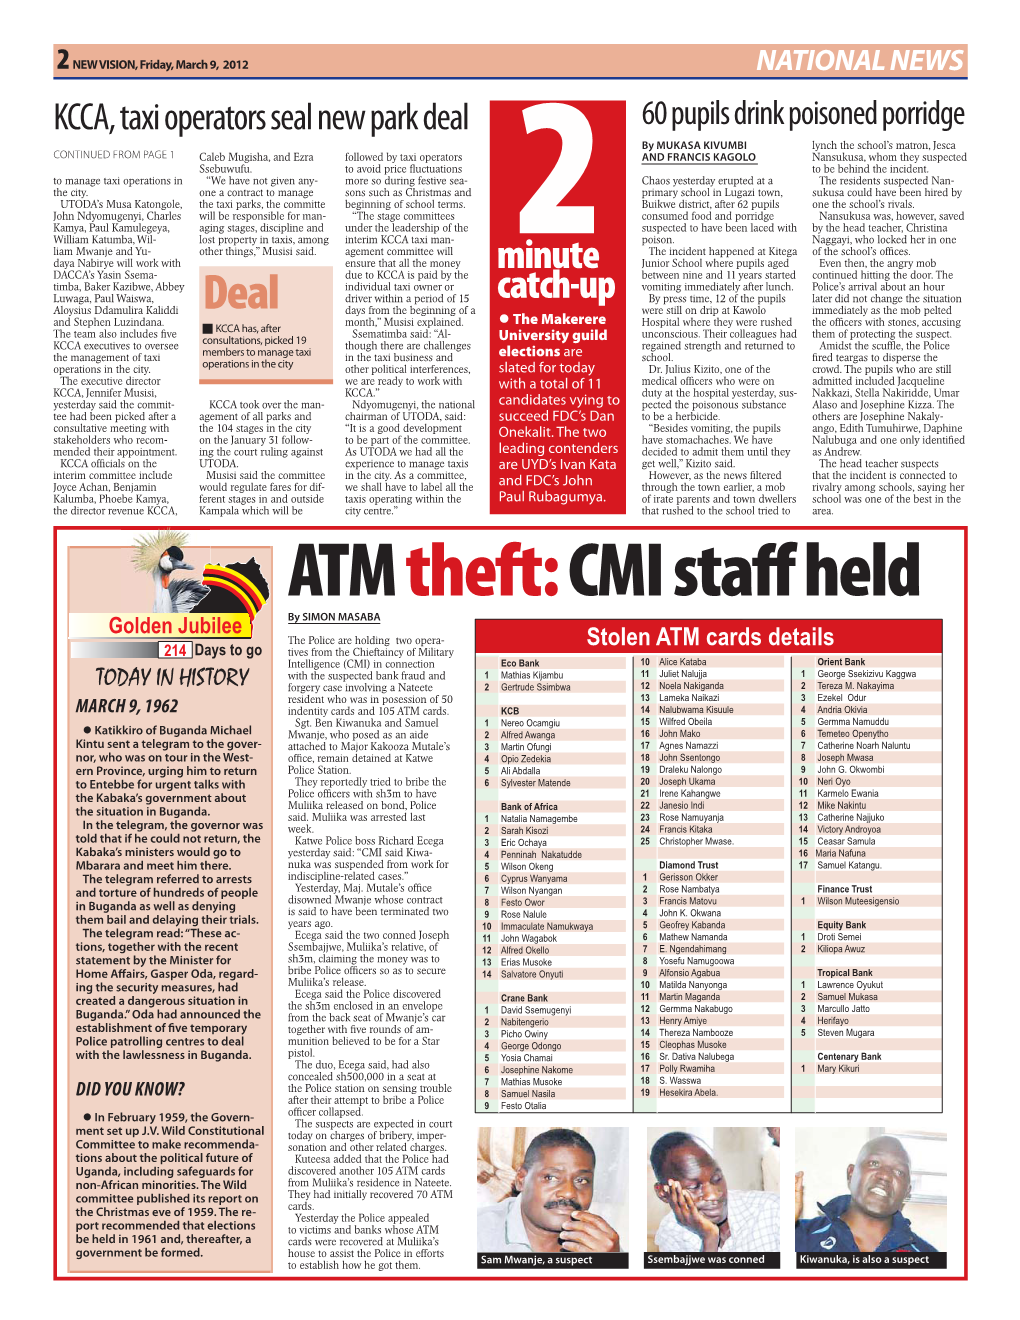 ATM Theft:CMI Staffheld